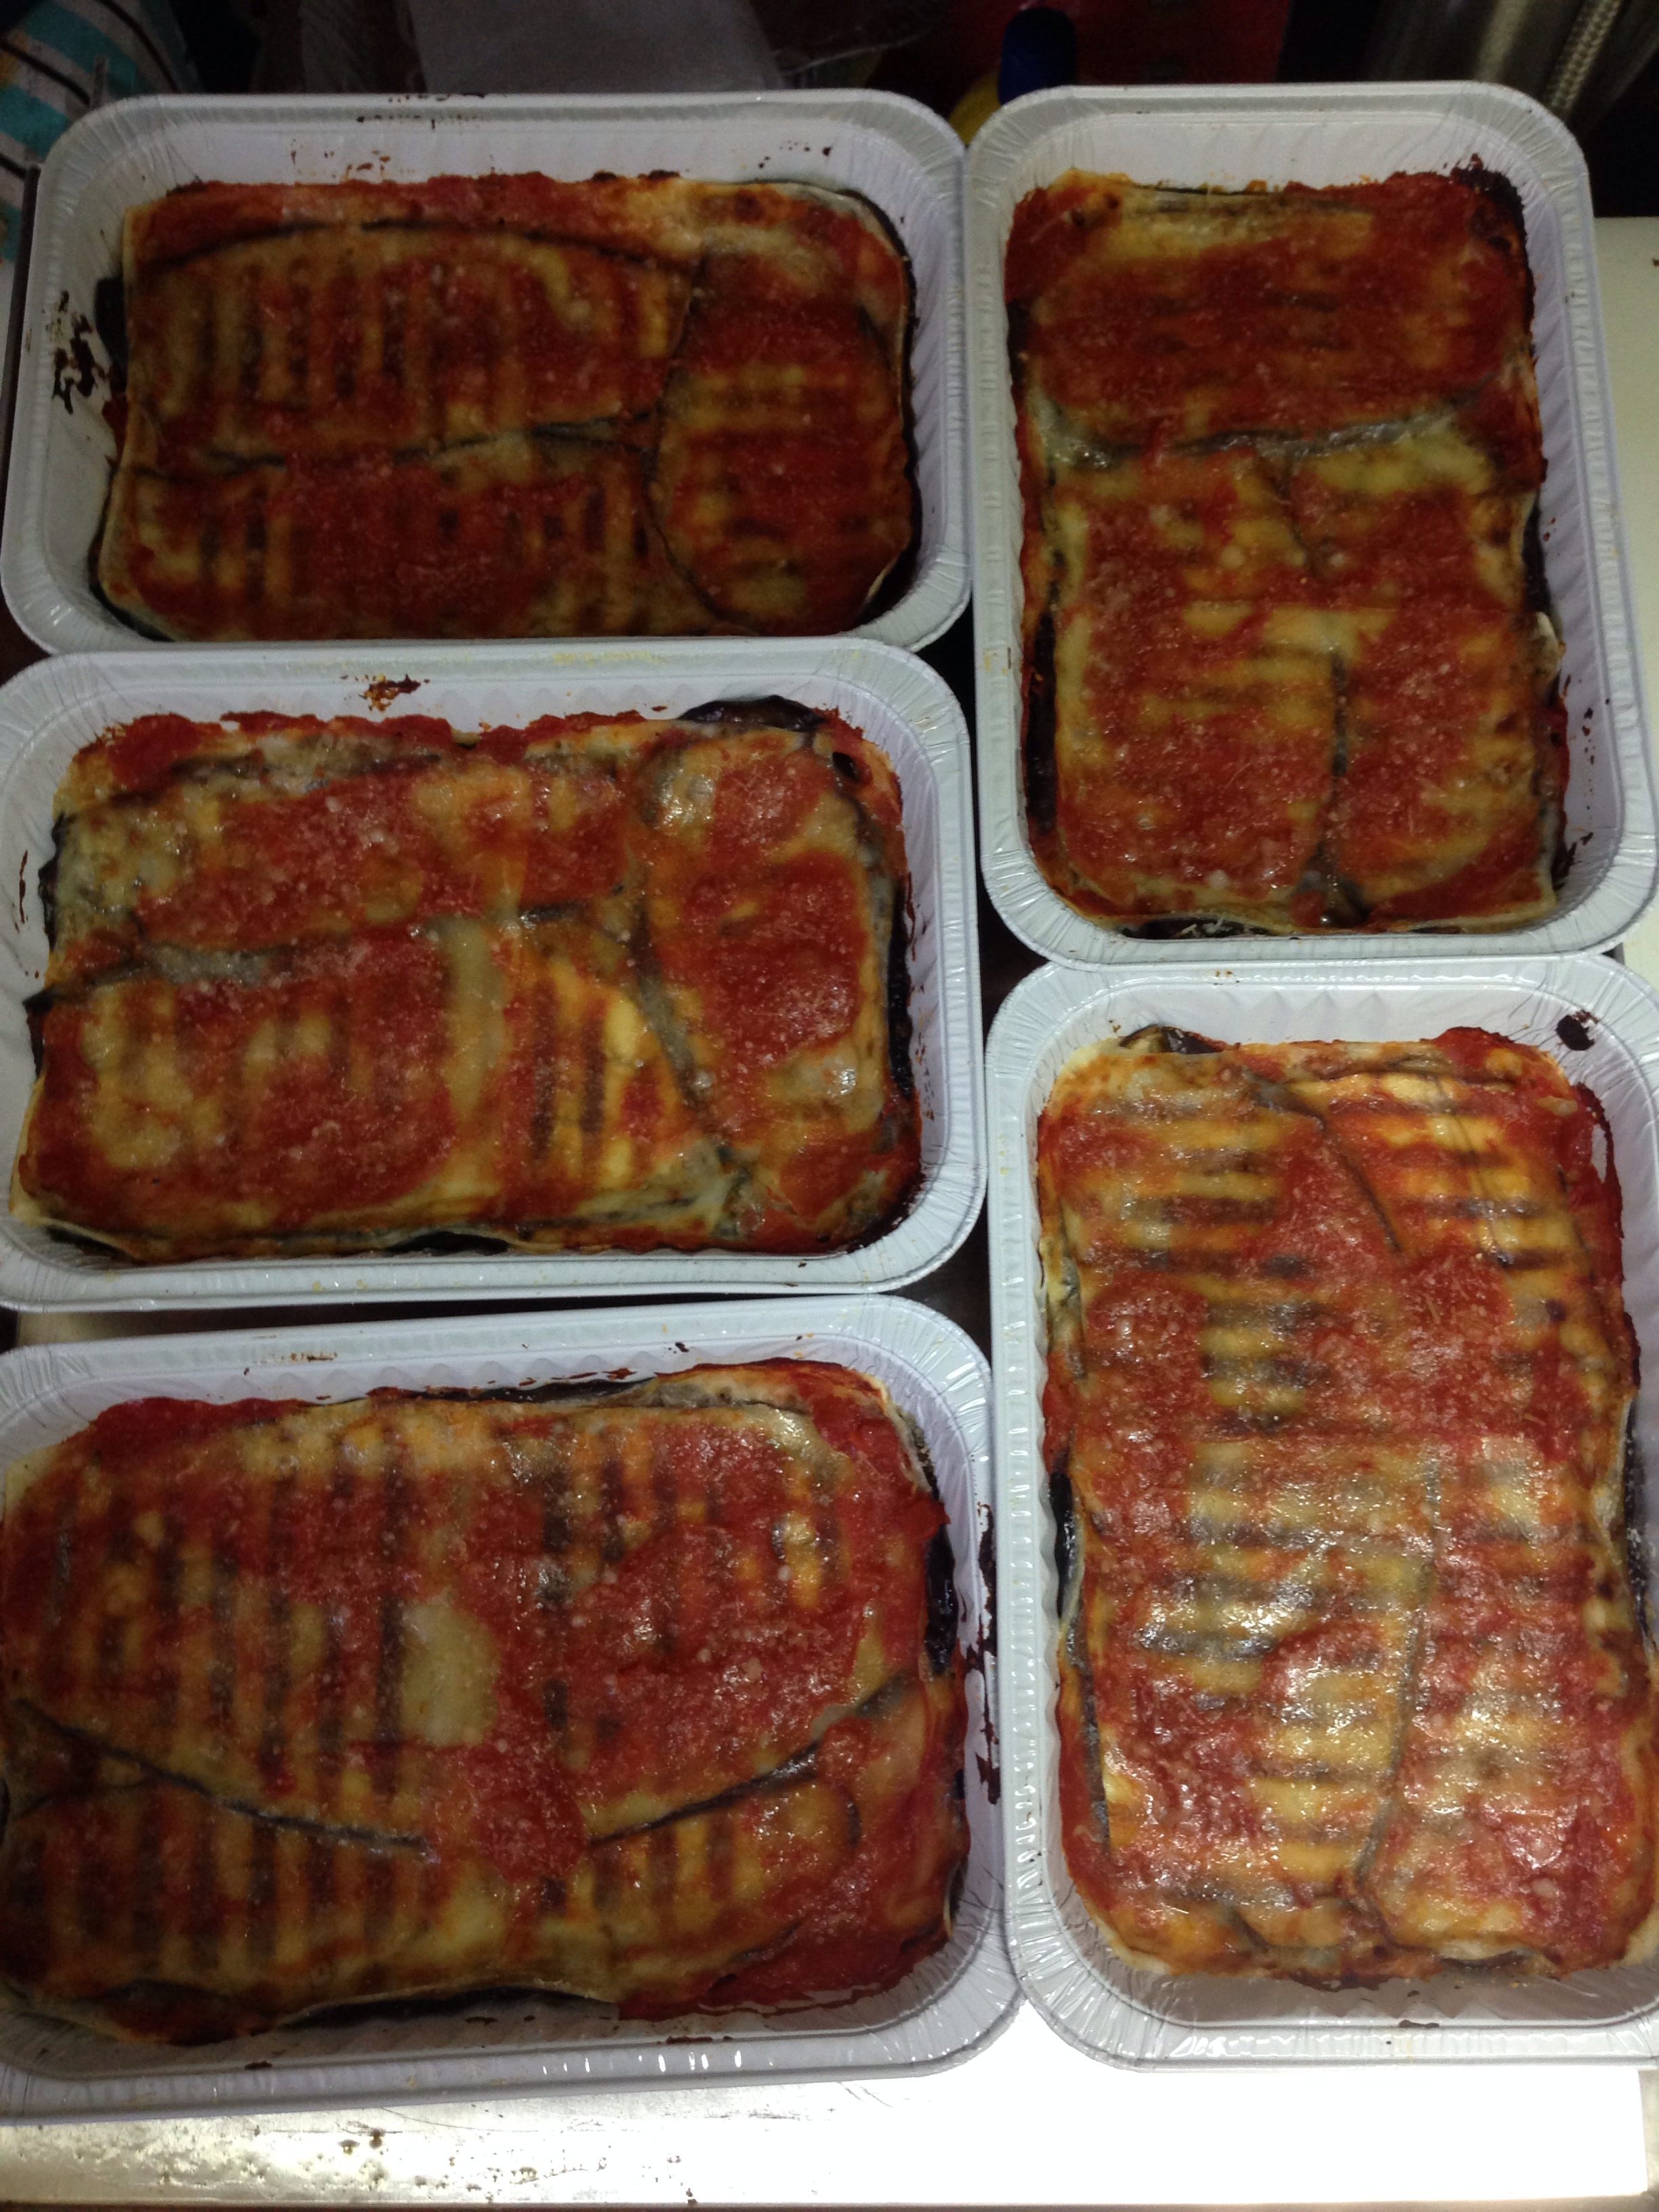 gastronomia d'asporto polesella Rovigo "La Carne"